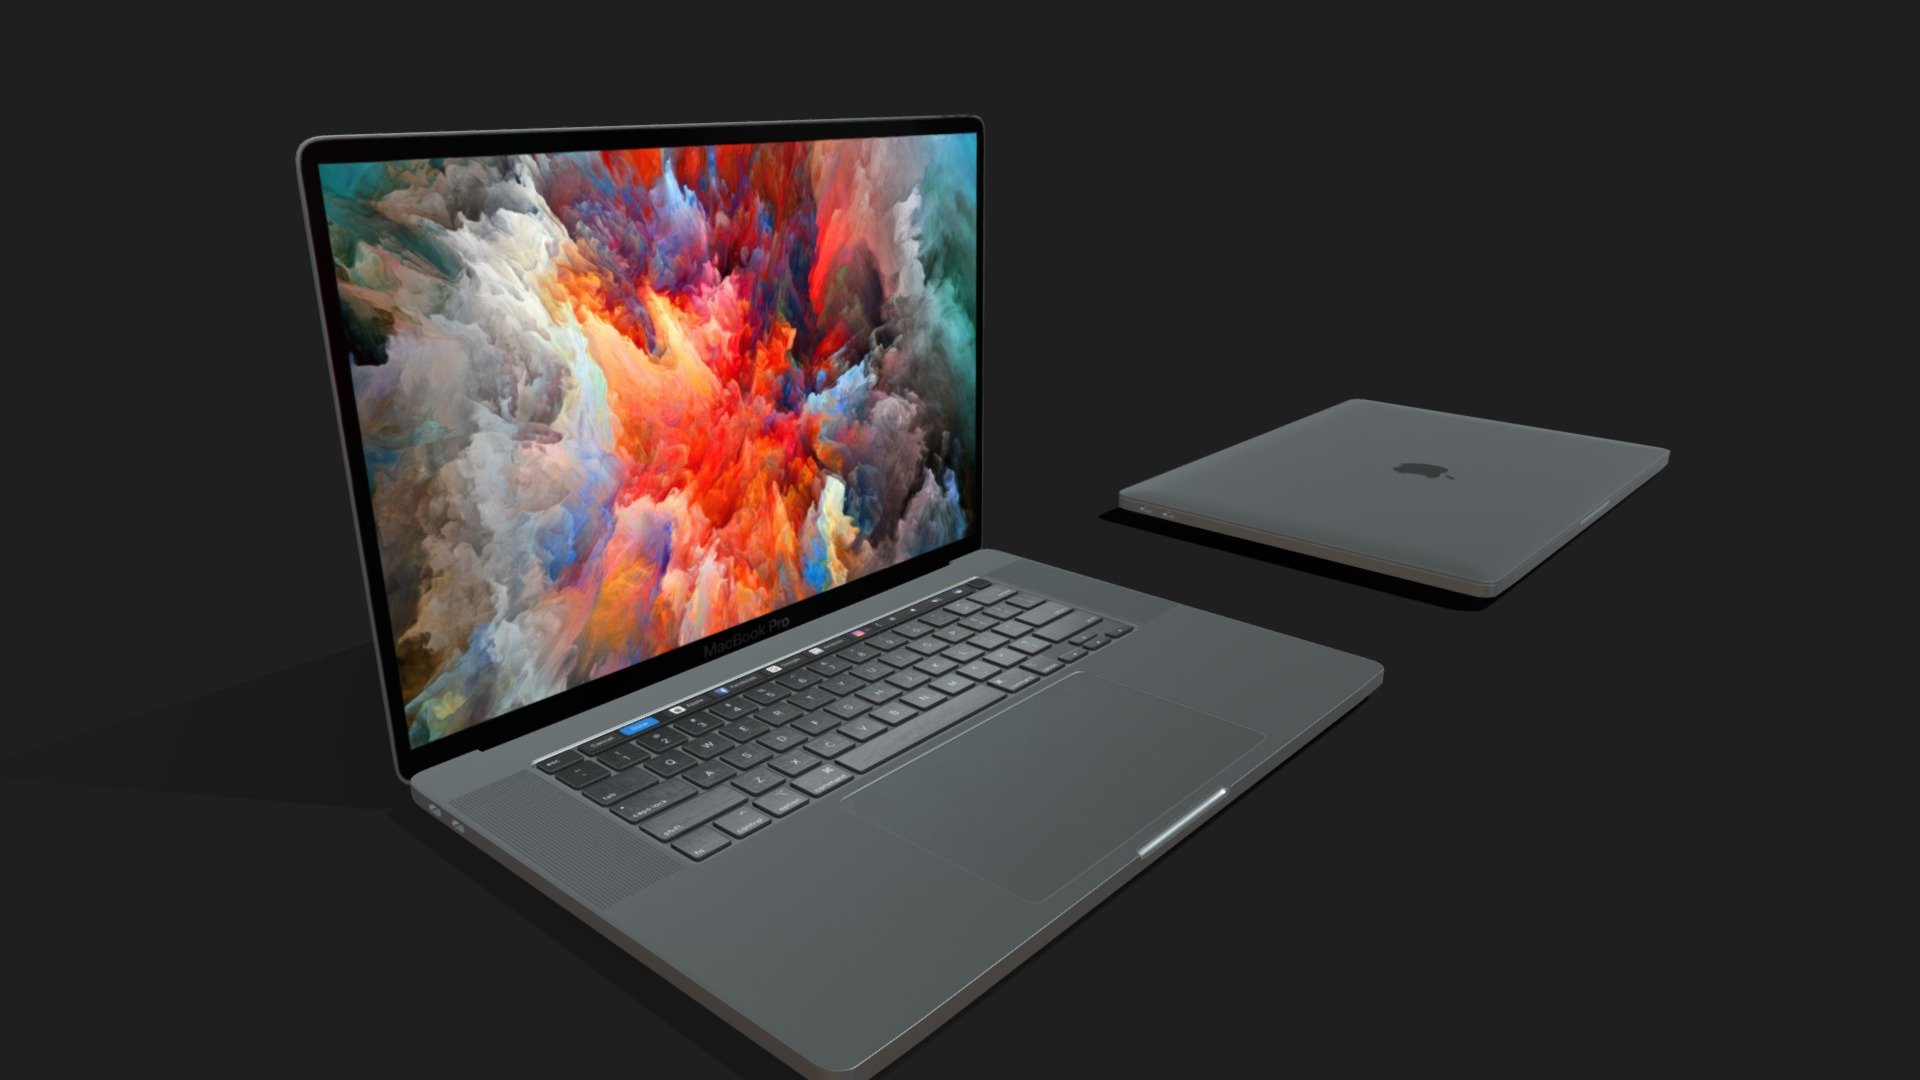 Macbook pro, hope you like it.
Thank you 3d model